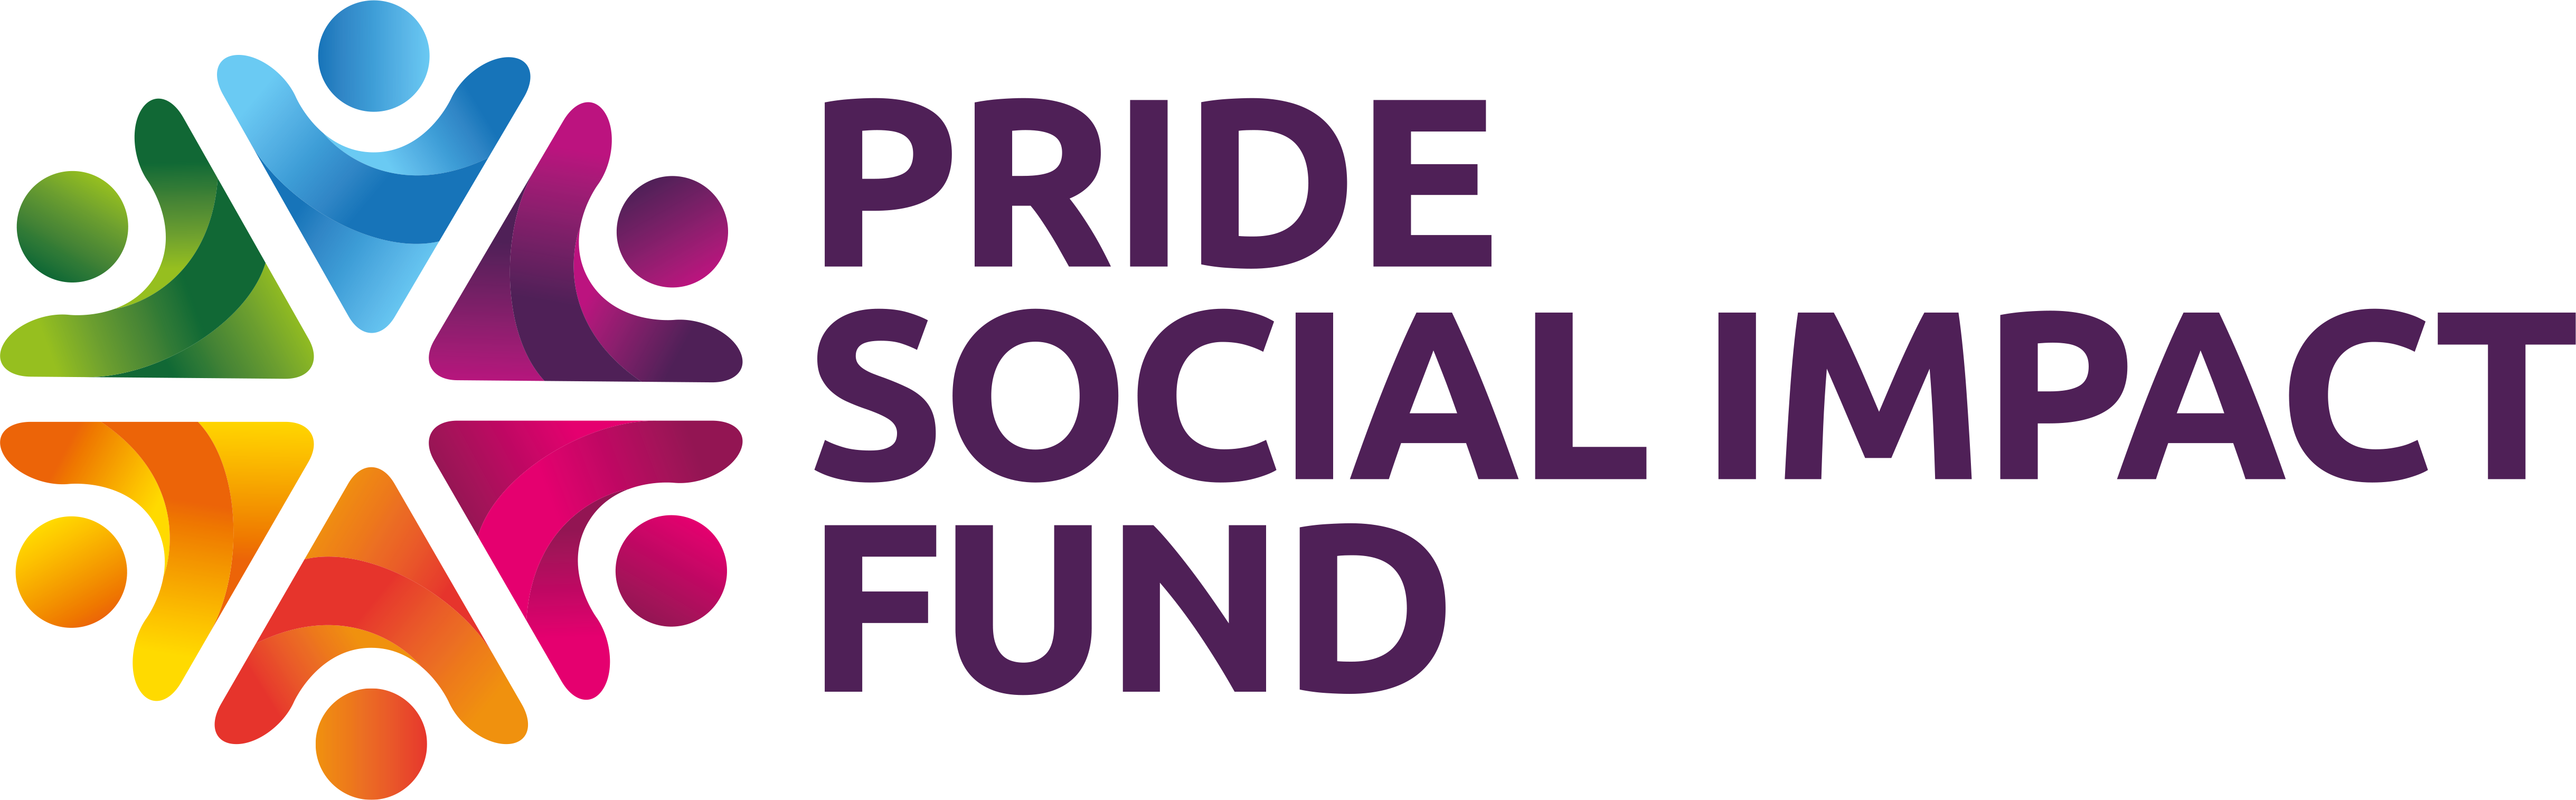 Pride Social Impact Fund